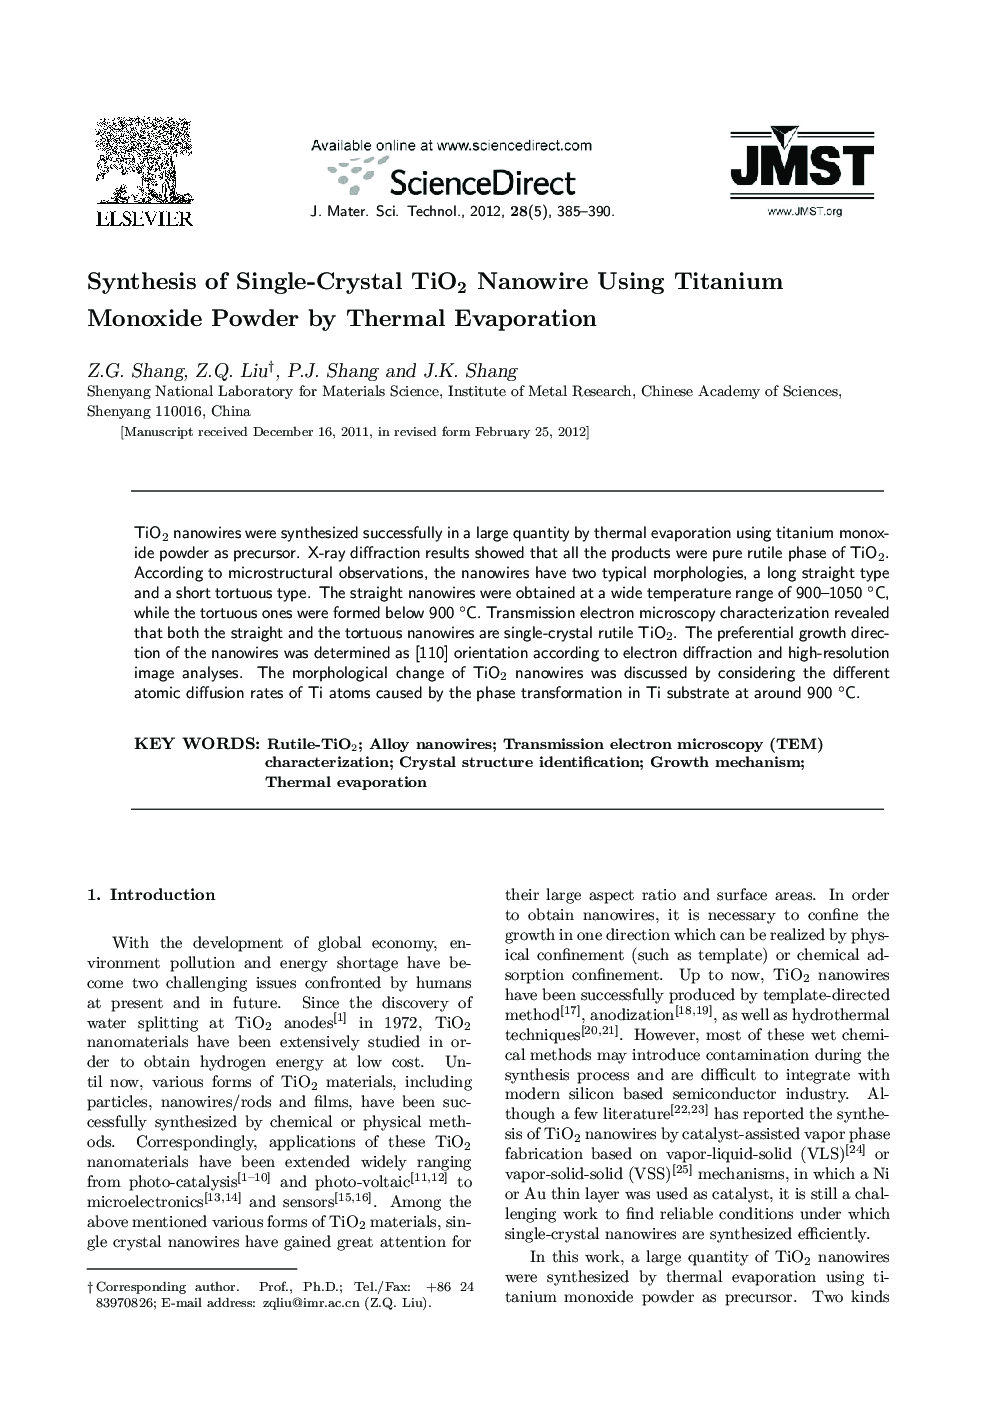 Synthesis of Single-Crystal TiO2 Nanowire Using Titanium Monoxide Powder by Thermal Evaporation